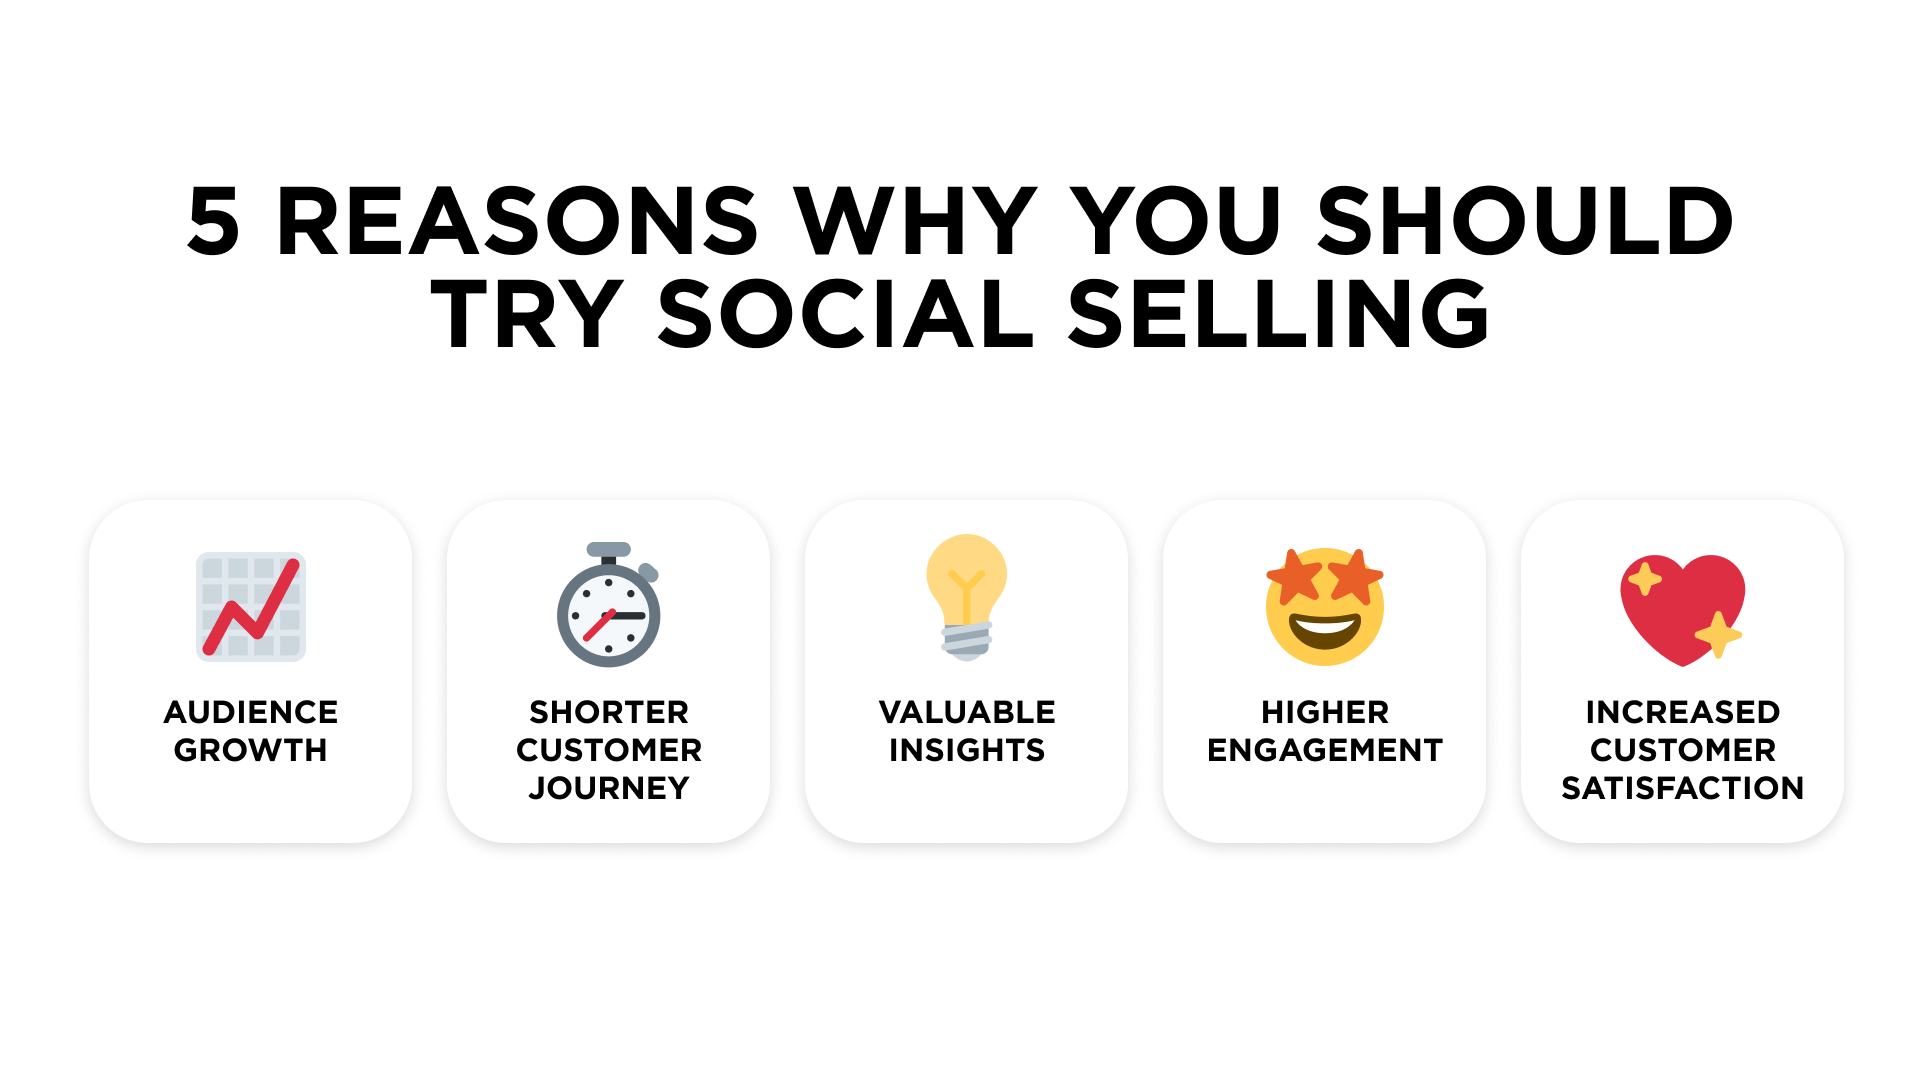 Social selling benefits